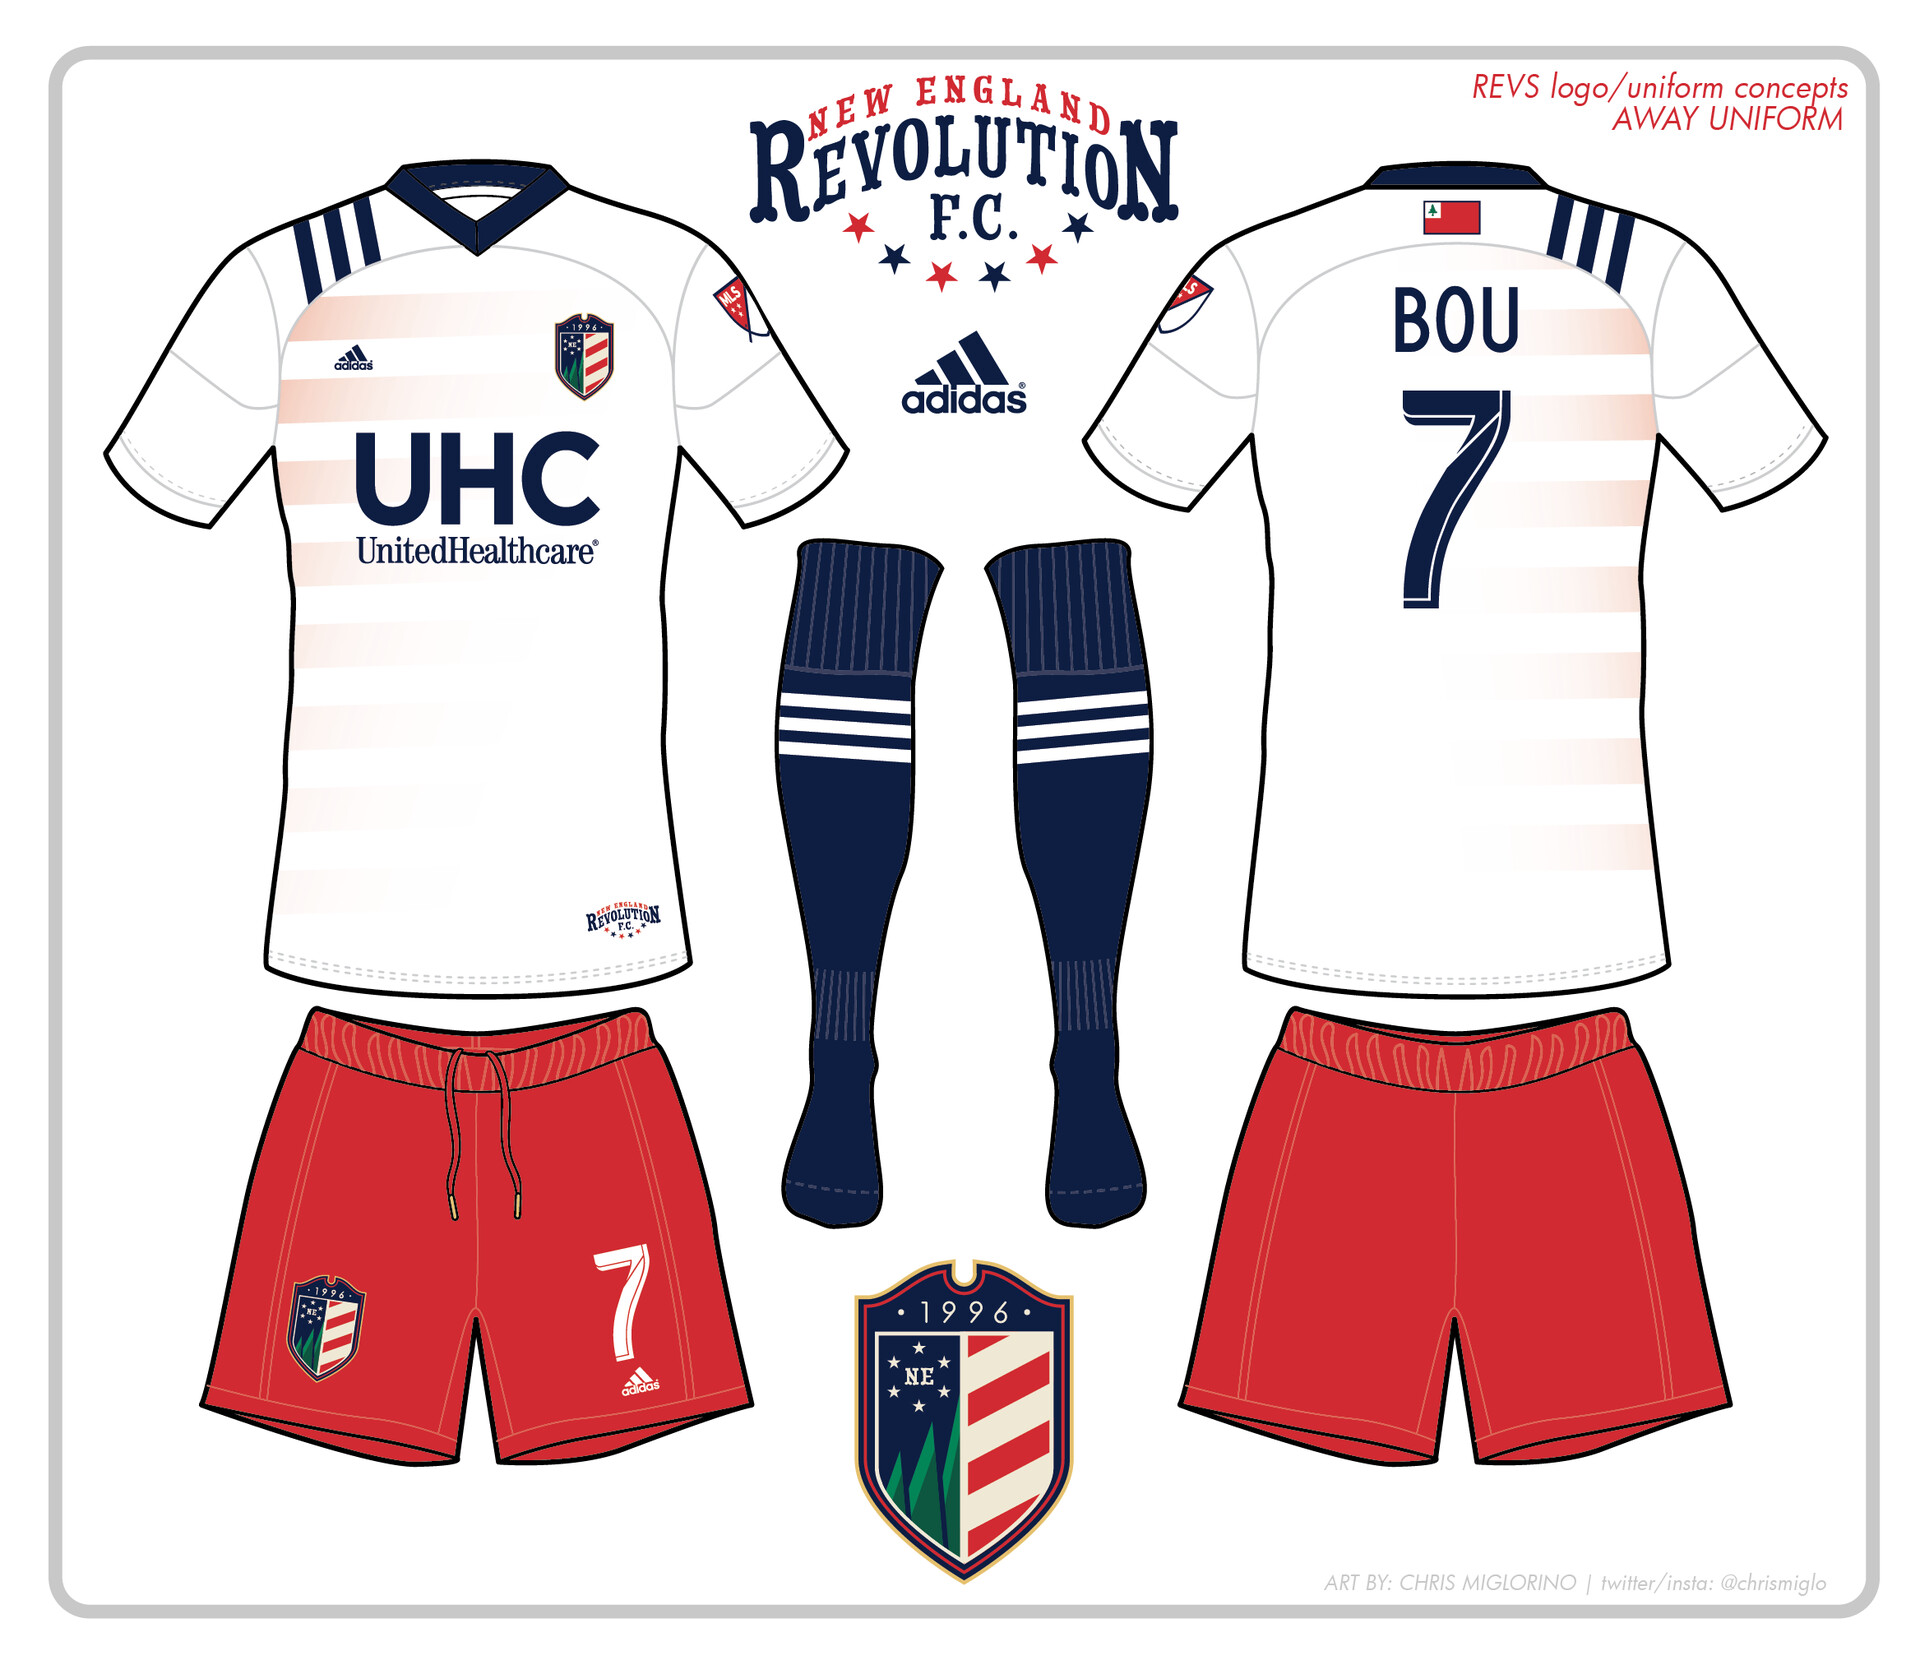 Chris Miglorino - Logo/Uniform Design Concepts - New England Patriots